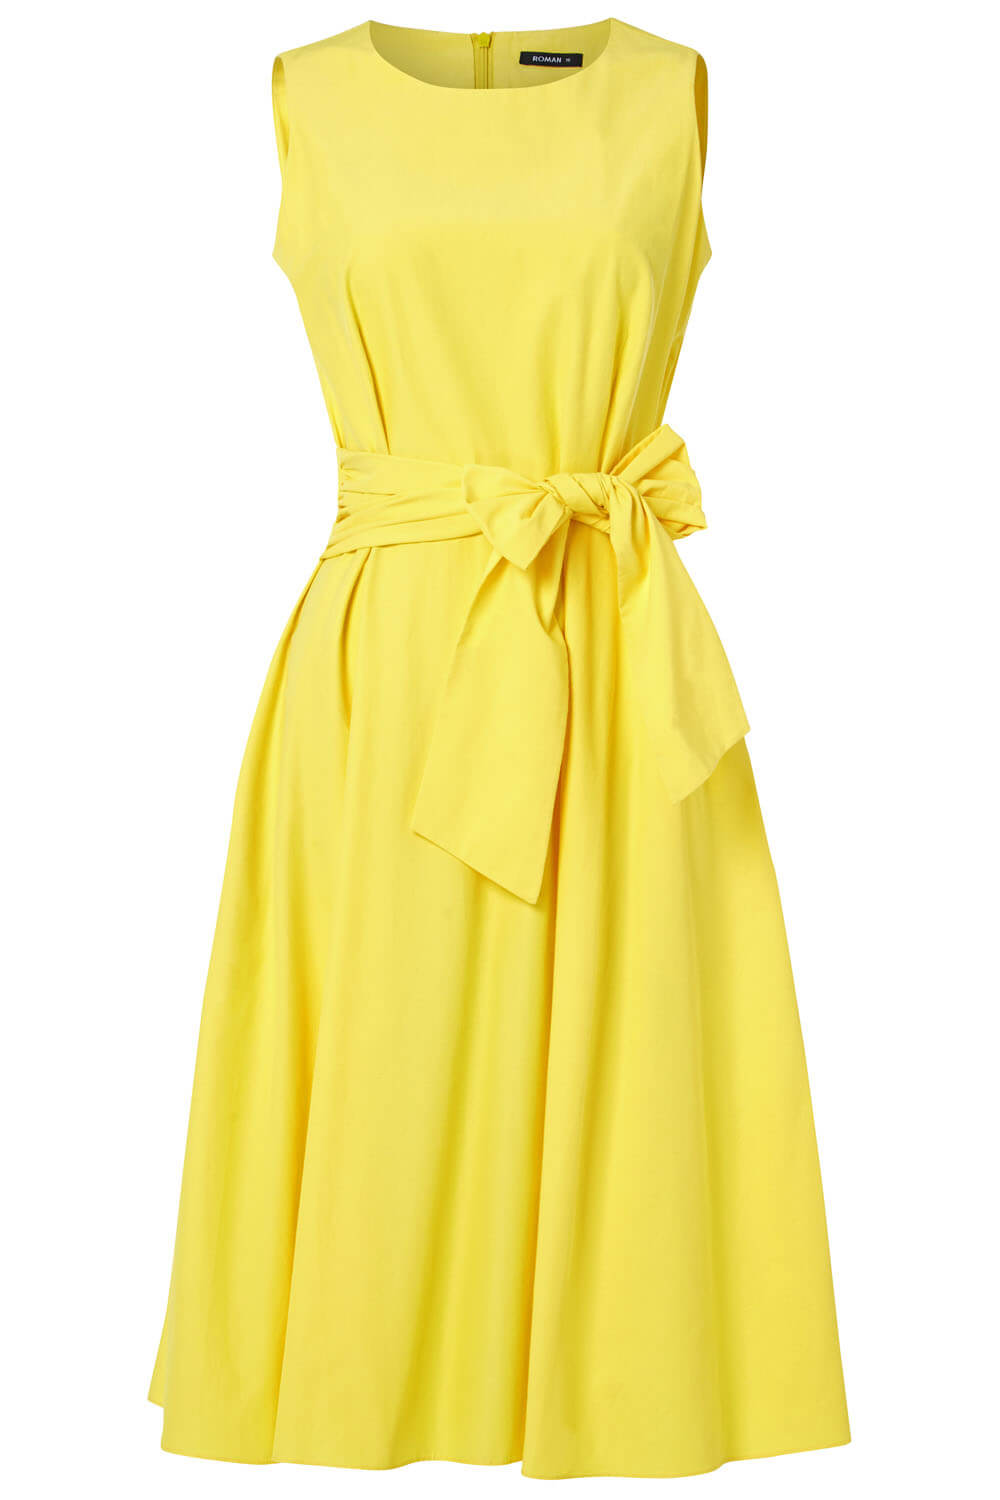 Cotton Tie Waist Midi Dress in Yellow - Roman Originals UK